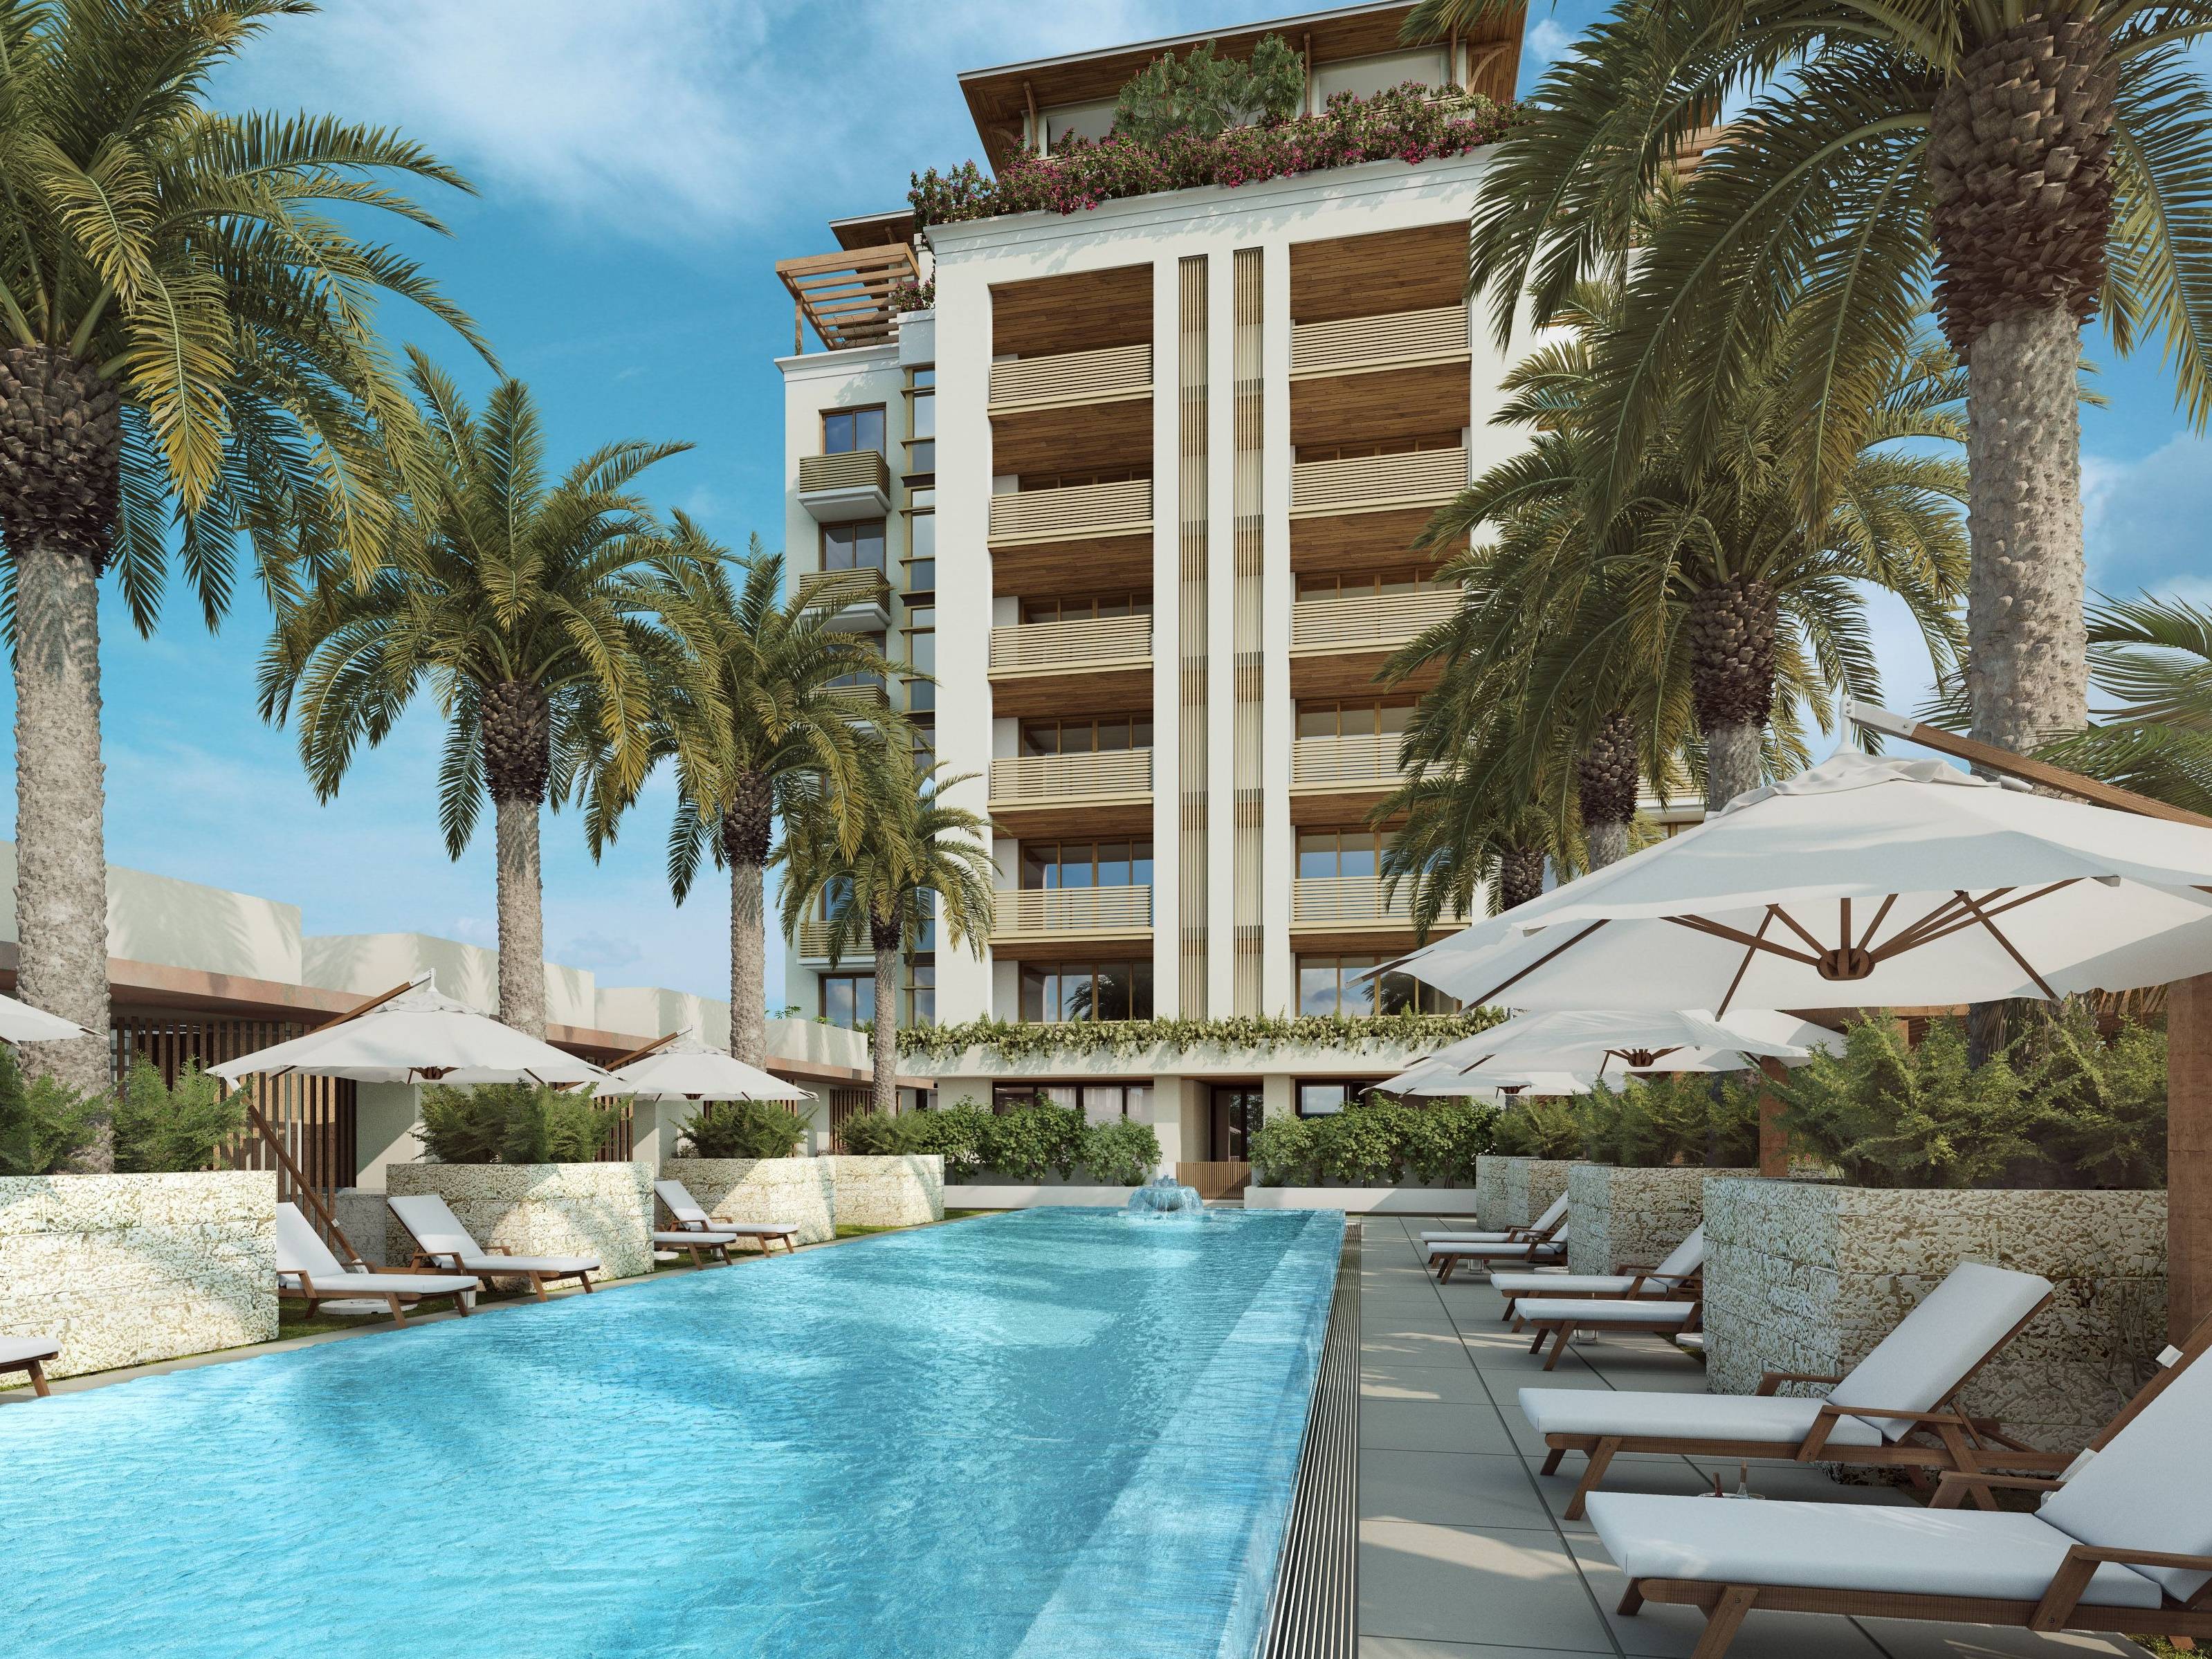 The Luxury Villa Valencia Lifestyle in Coral Gables